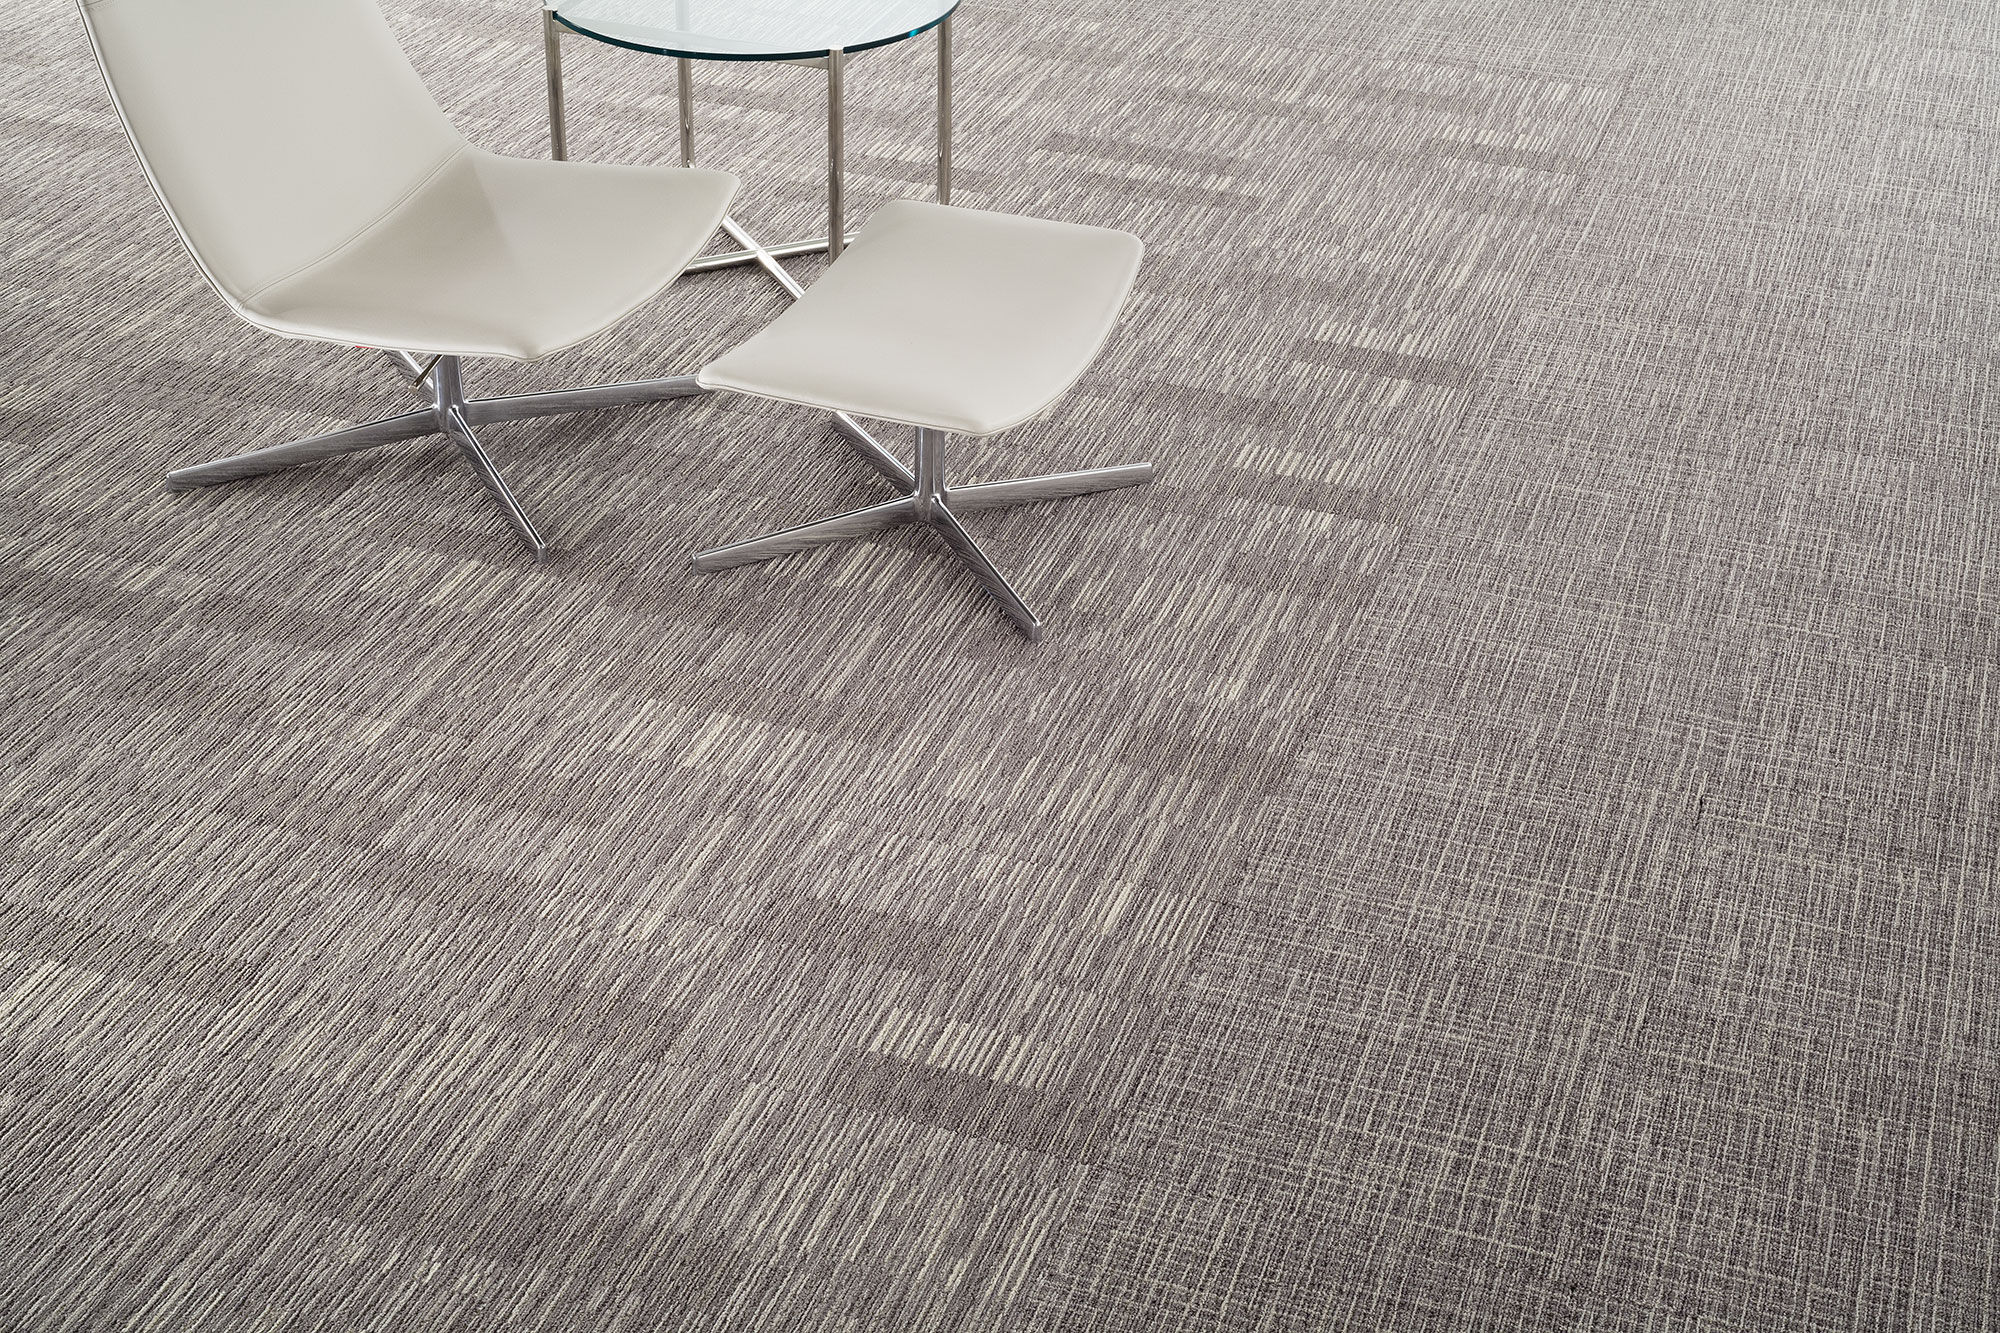 best carpet designs office carpet dubai across uae furniture trends and floor tiles pictures  best PIZEYCZ